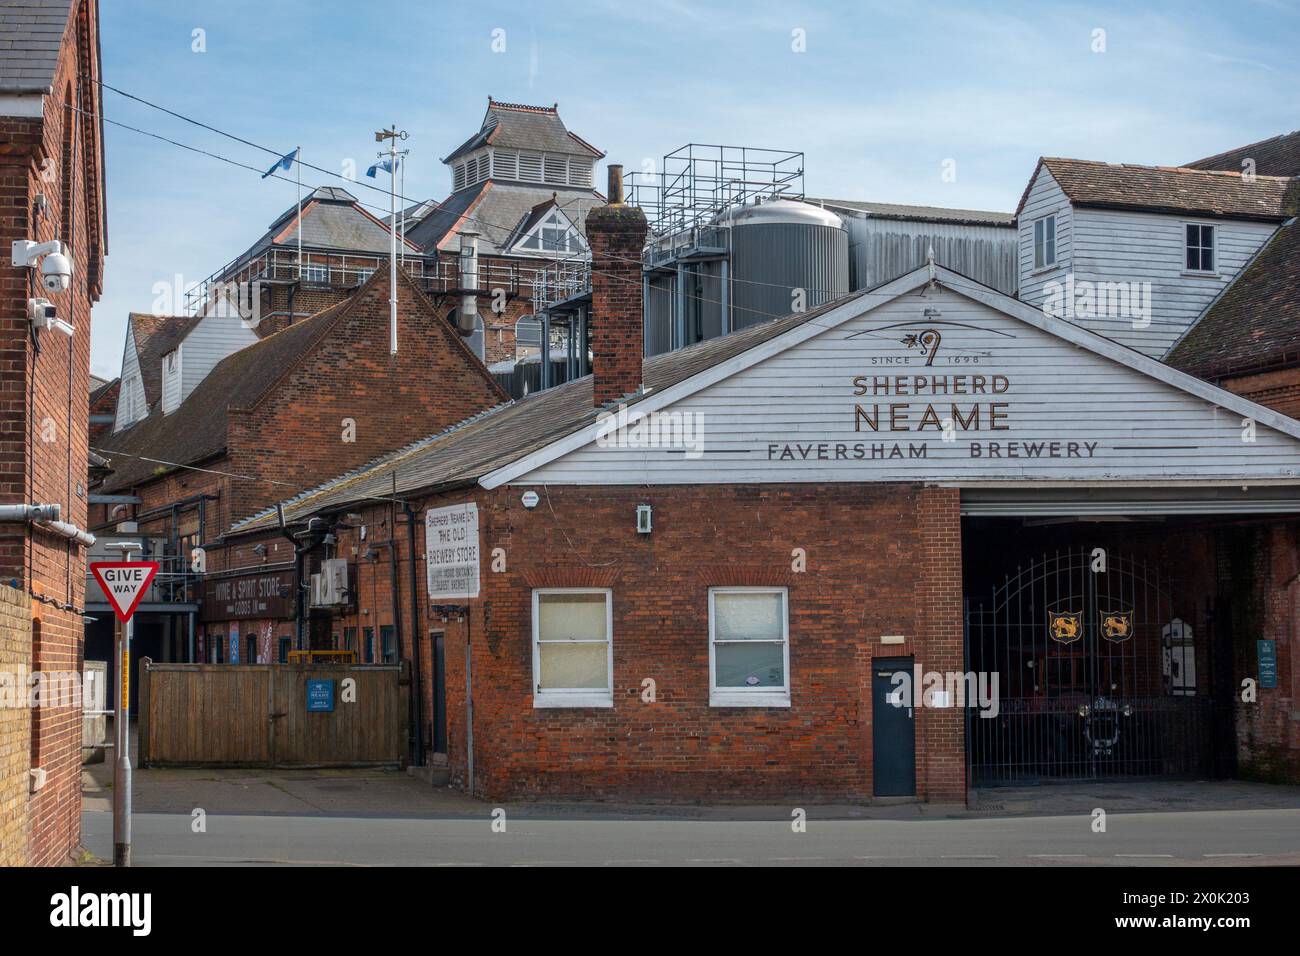 Shepherd Neame,Faversham Brewery,Beer,Lager,Faversham,Kent,England Stock Photo